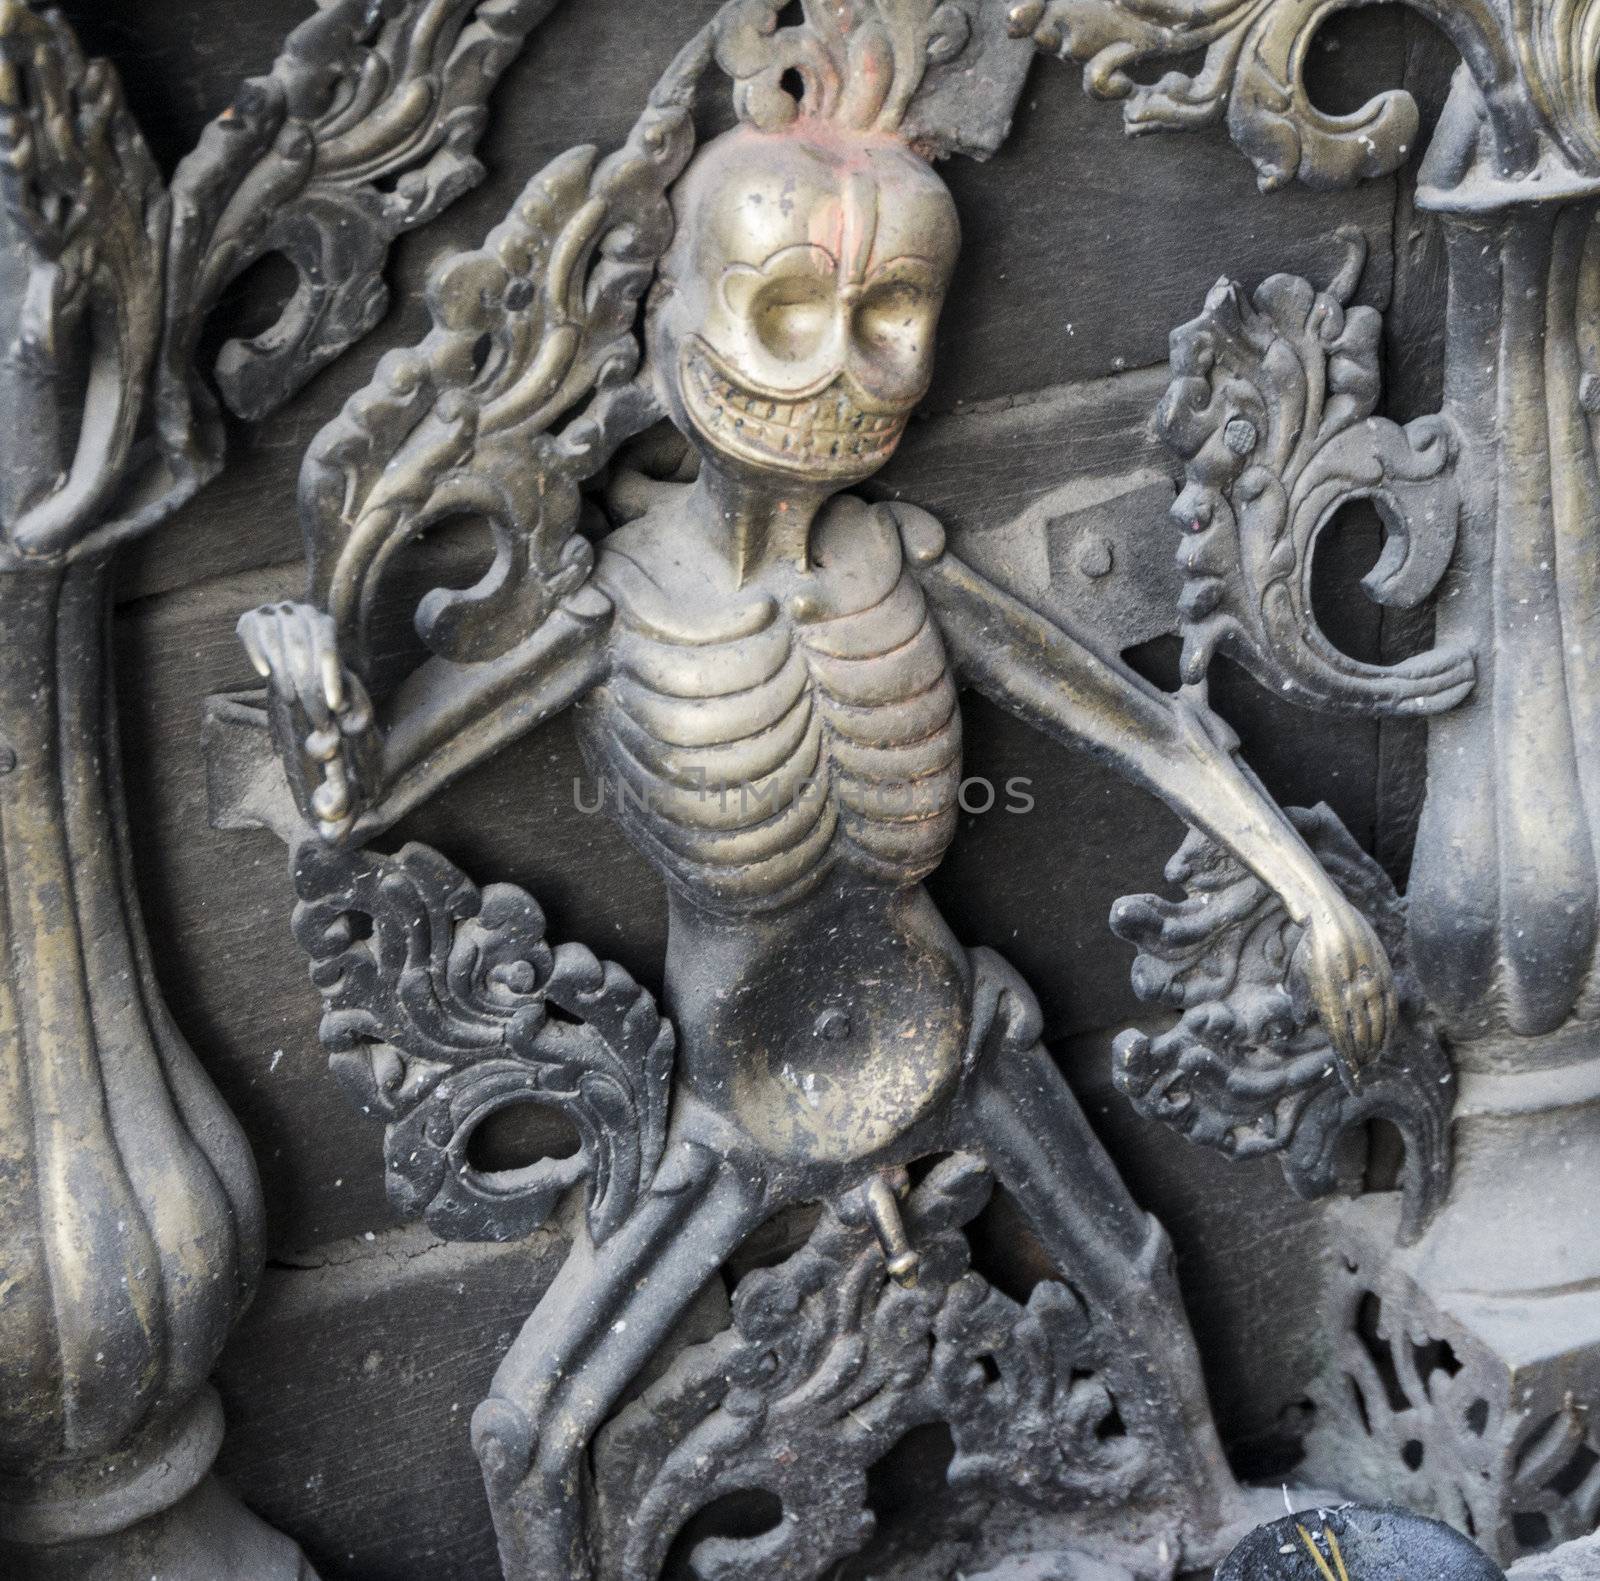 metal sculpture as a symbol of death by gewoldi